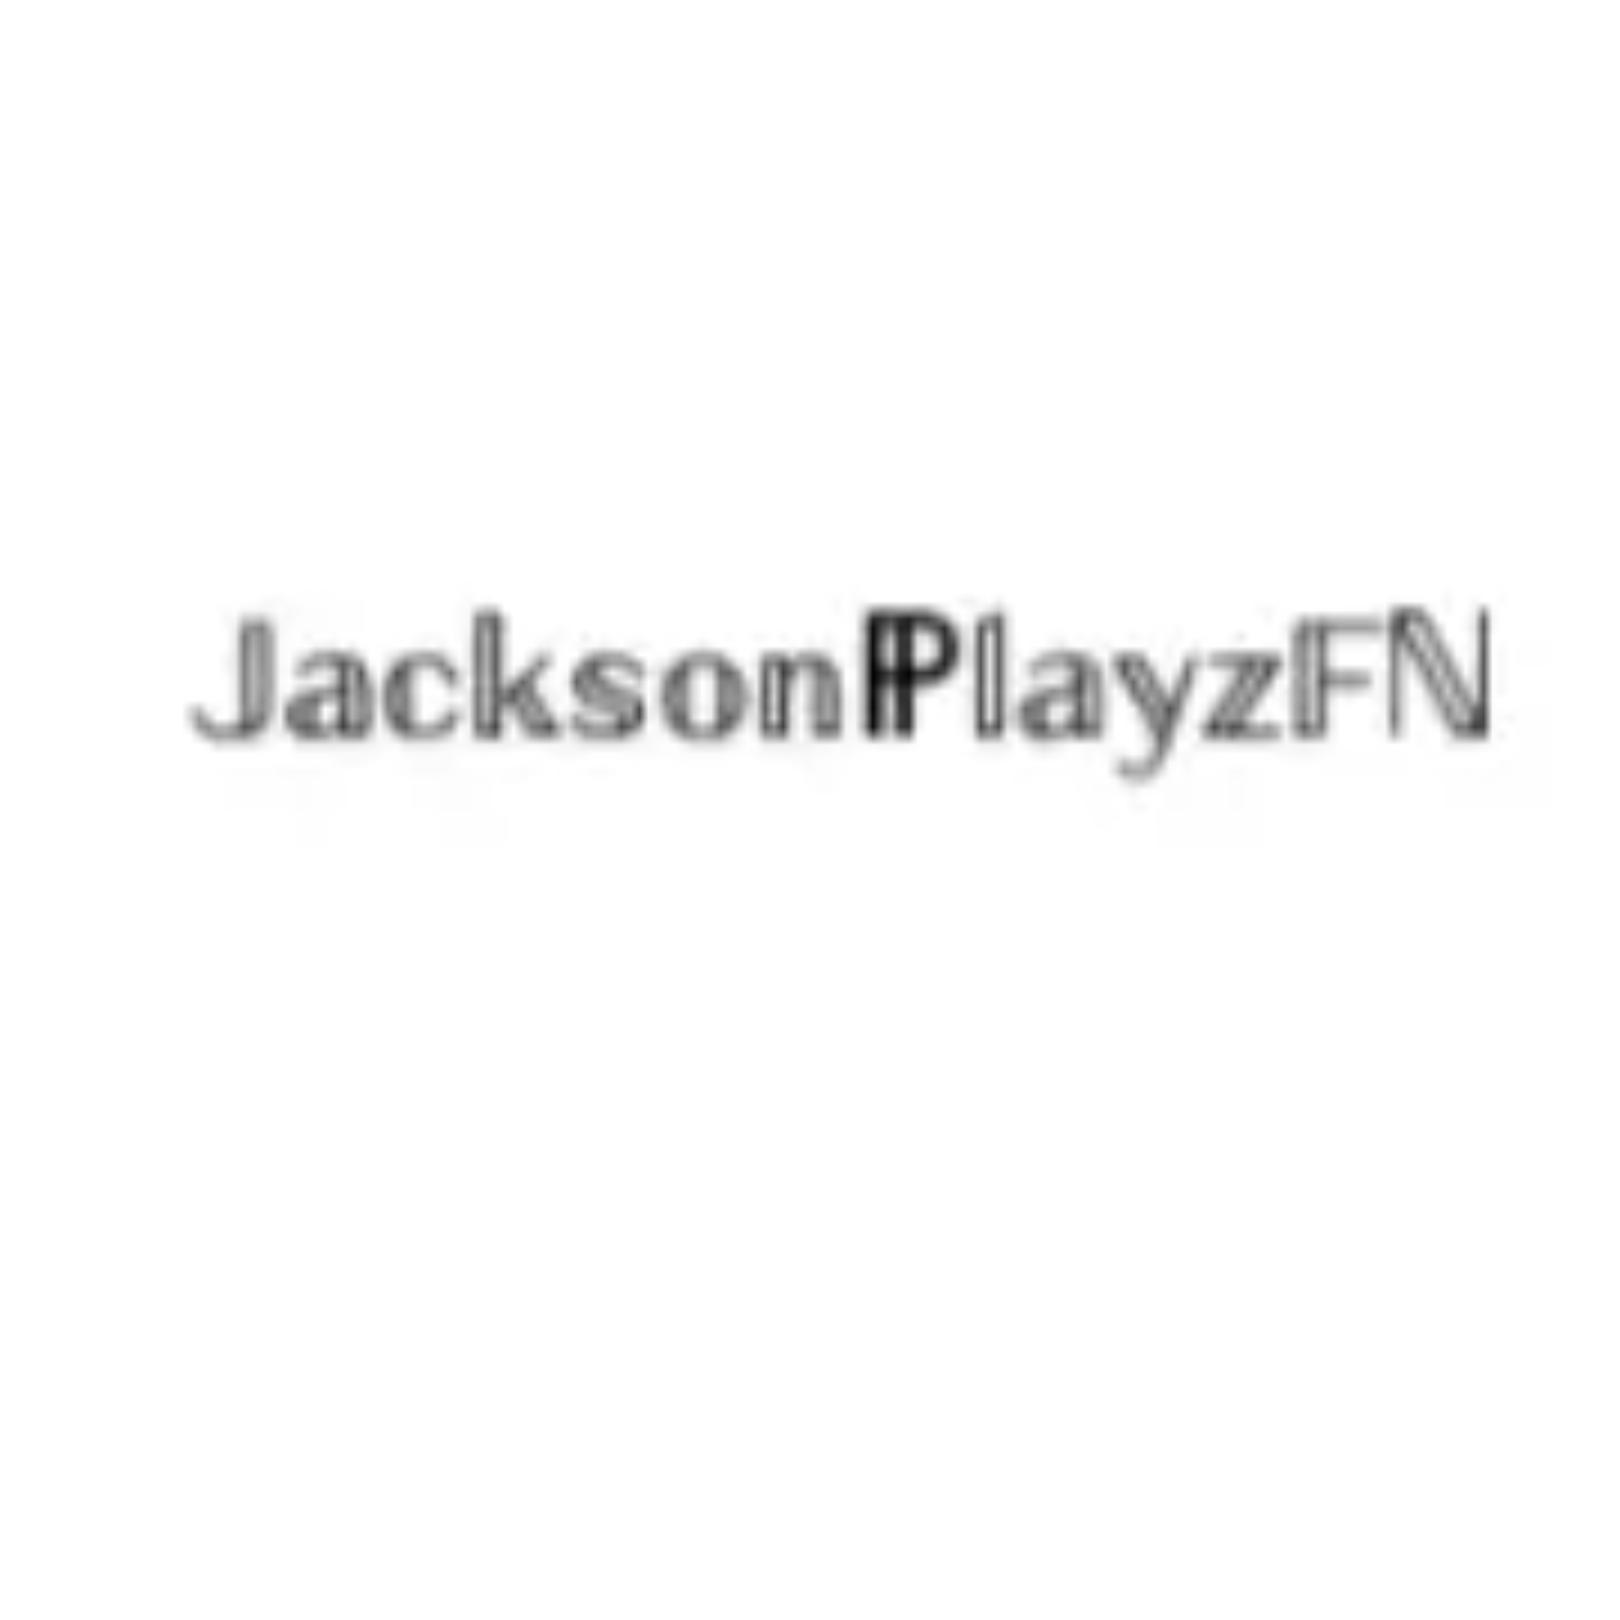 JacksonPlayzFN's images